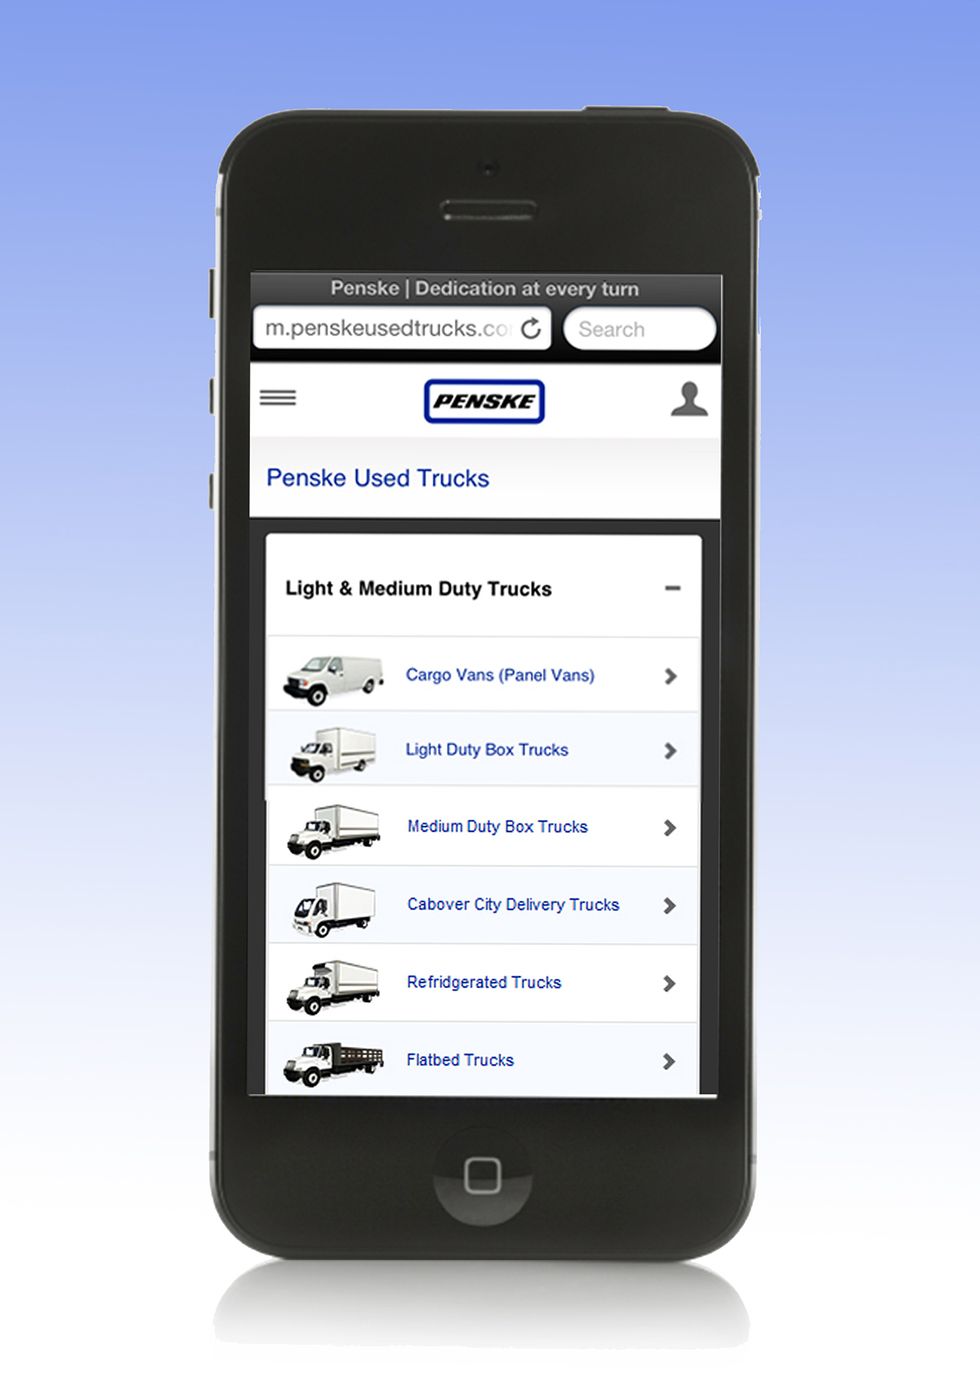 
Penske Used Trucks Launches New Mobile Website
